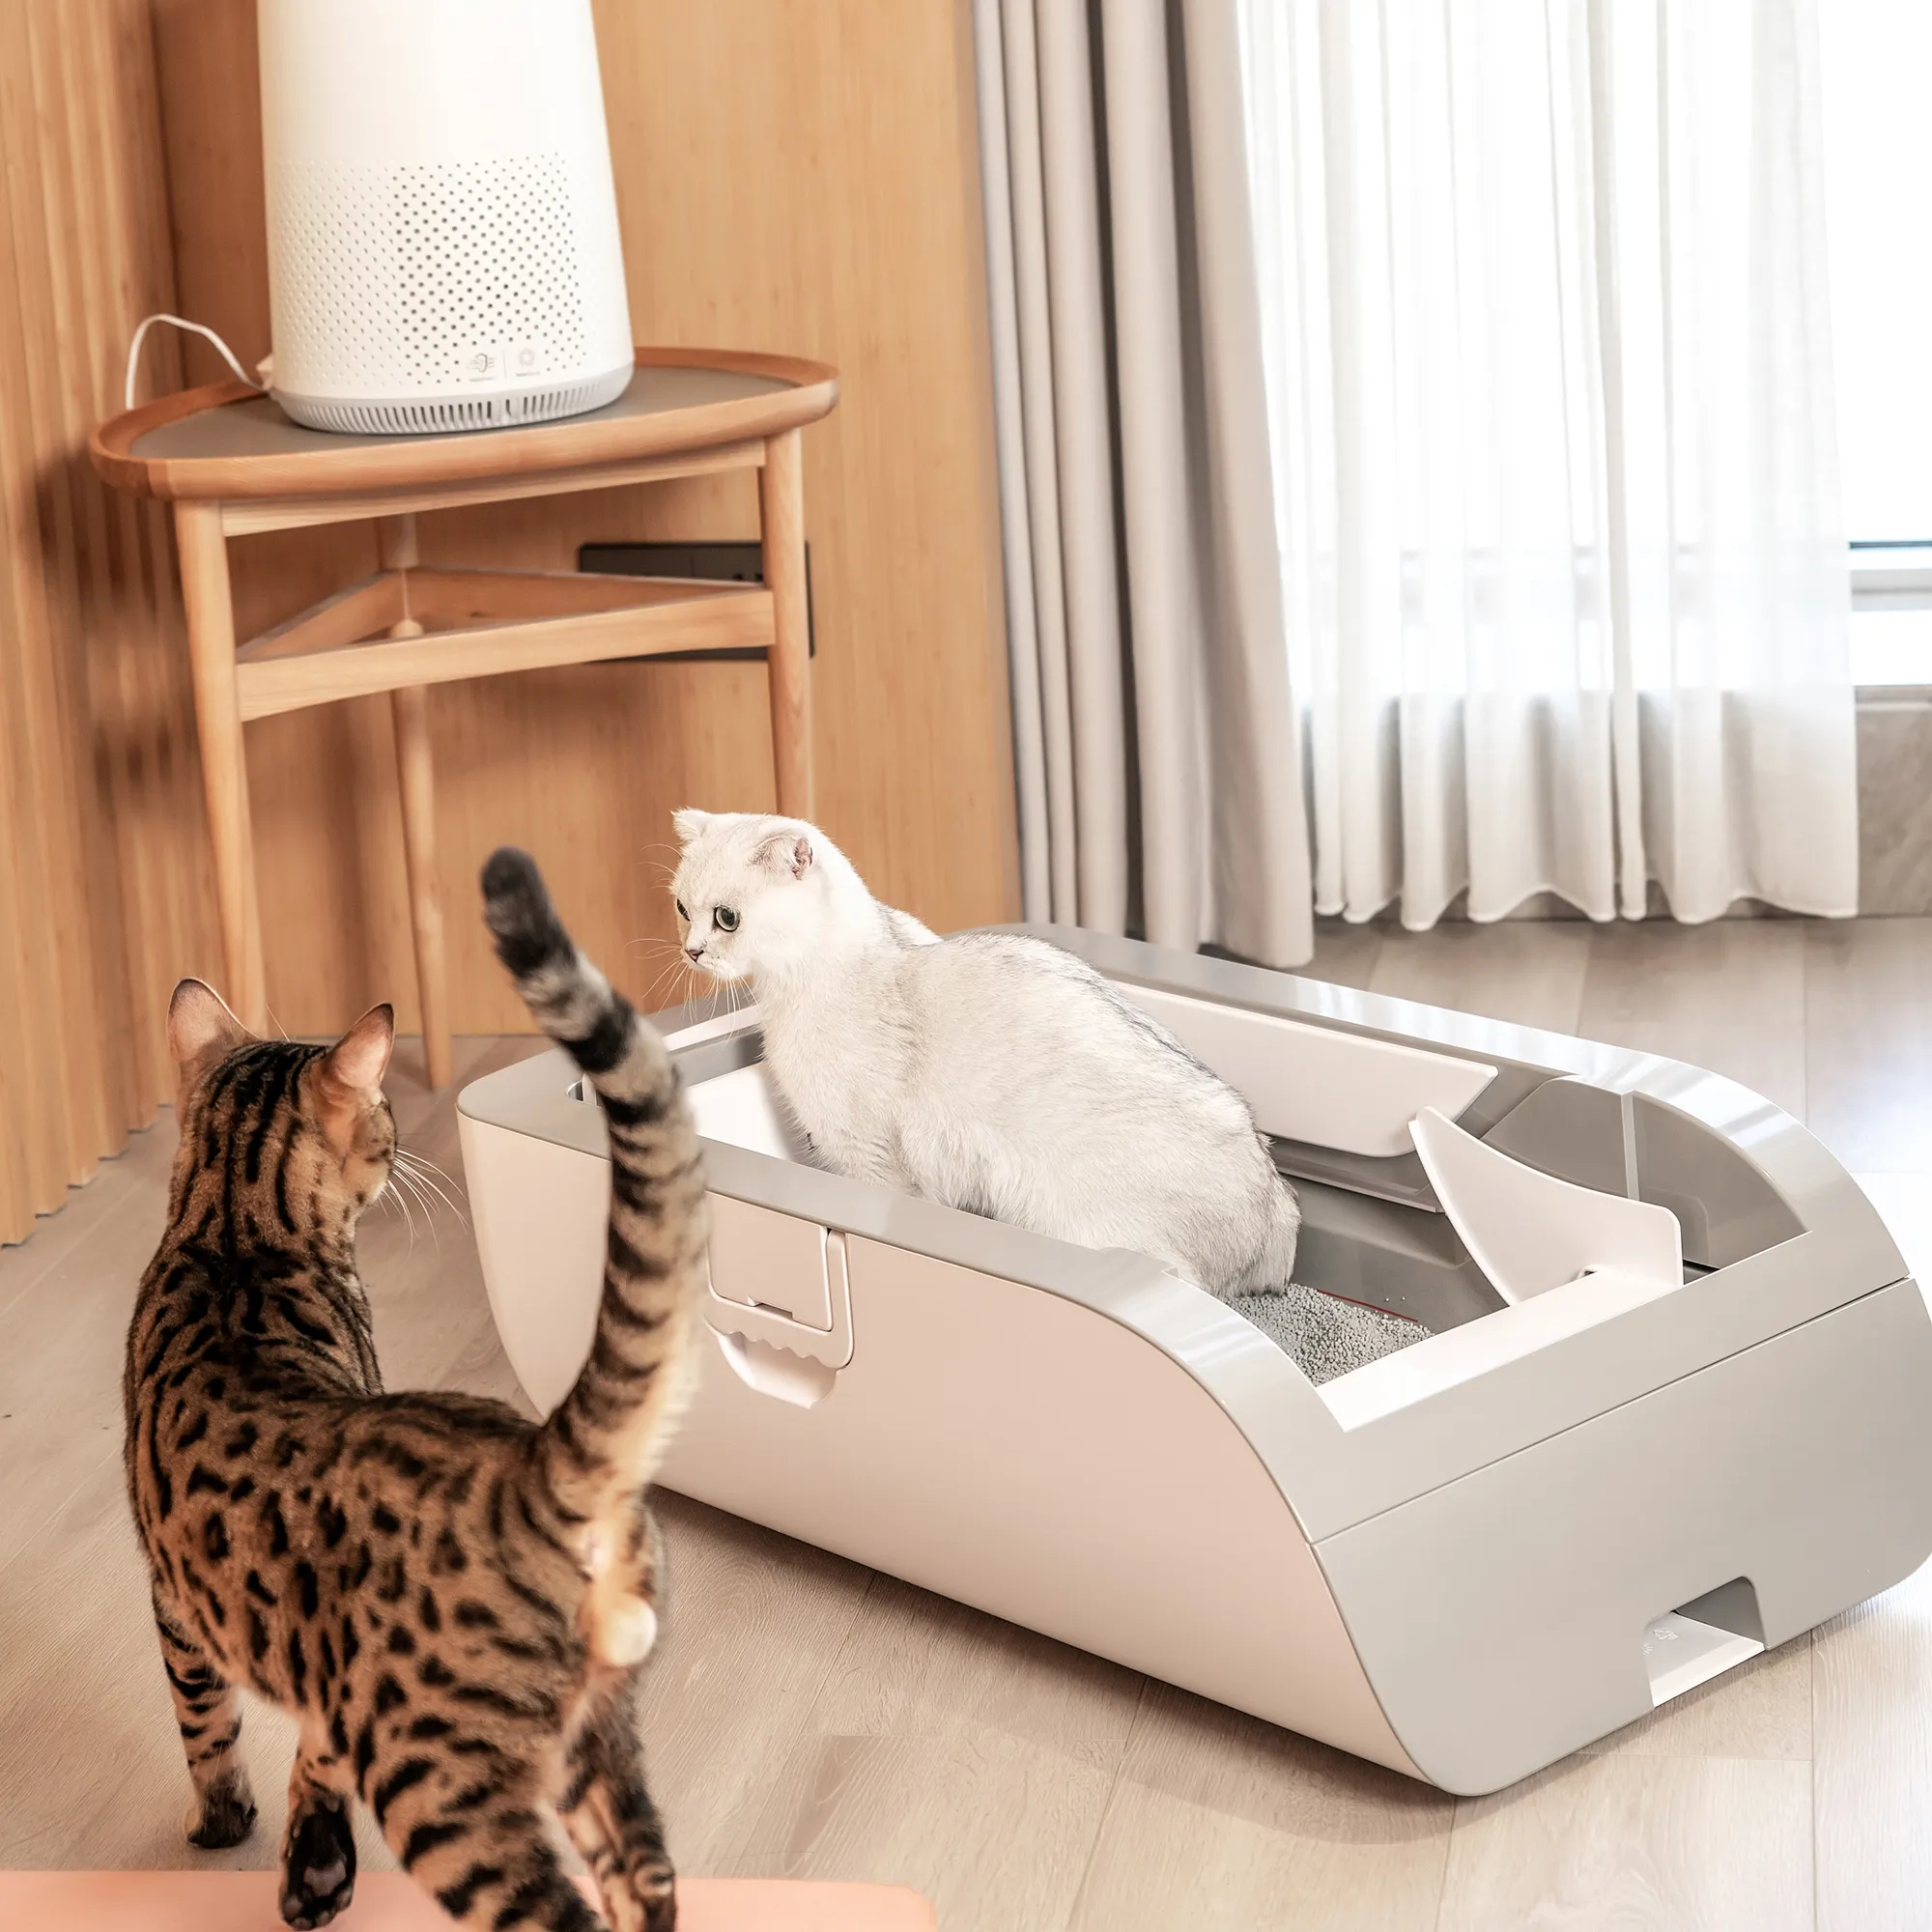 पालतू उत्पाद निर्माता स्मार्ट बिल्ली कूड़े बॉक्स बिल्ली कूड़े स्वचालित बॉक्स स्वयं सफाई बिल्ली कूड़े बॉक्स